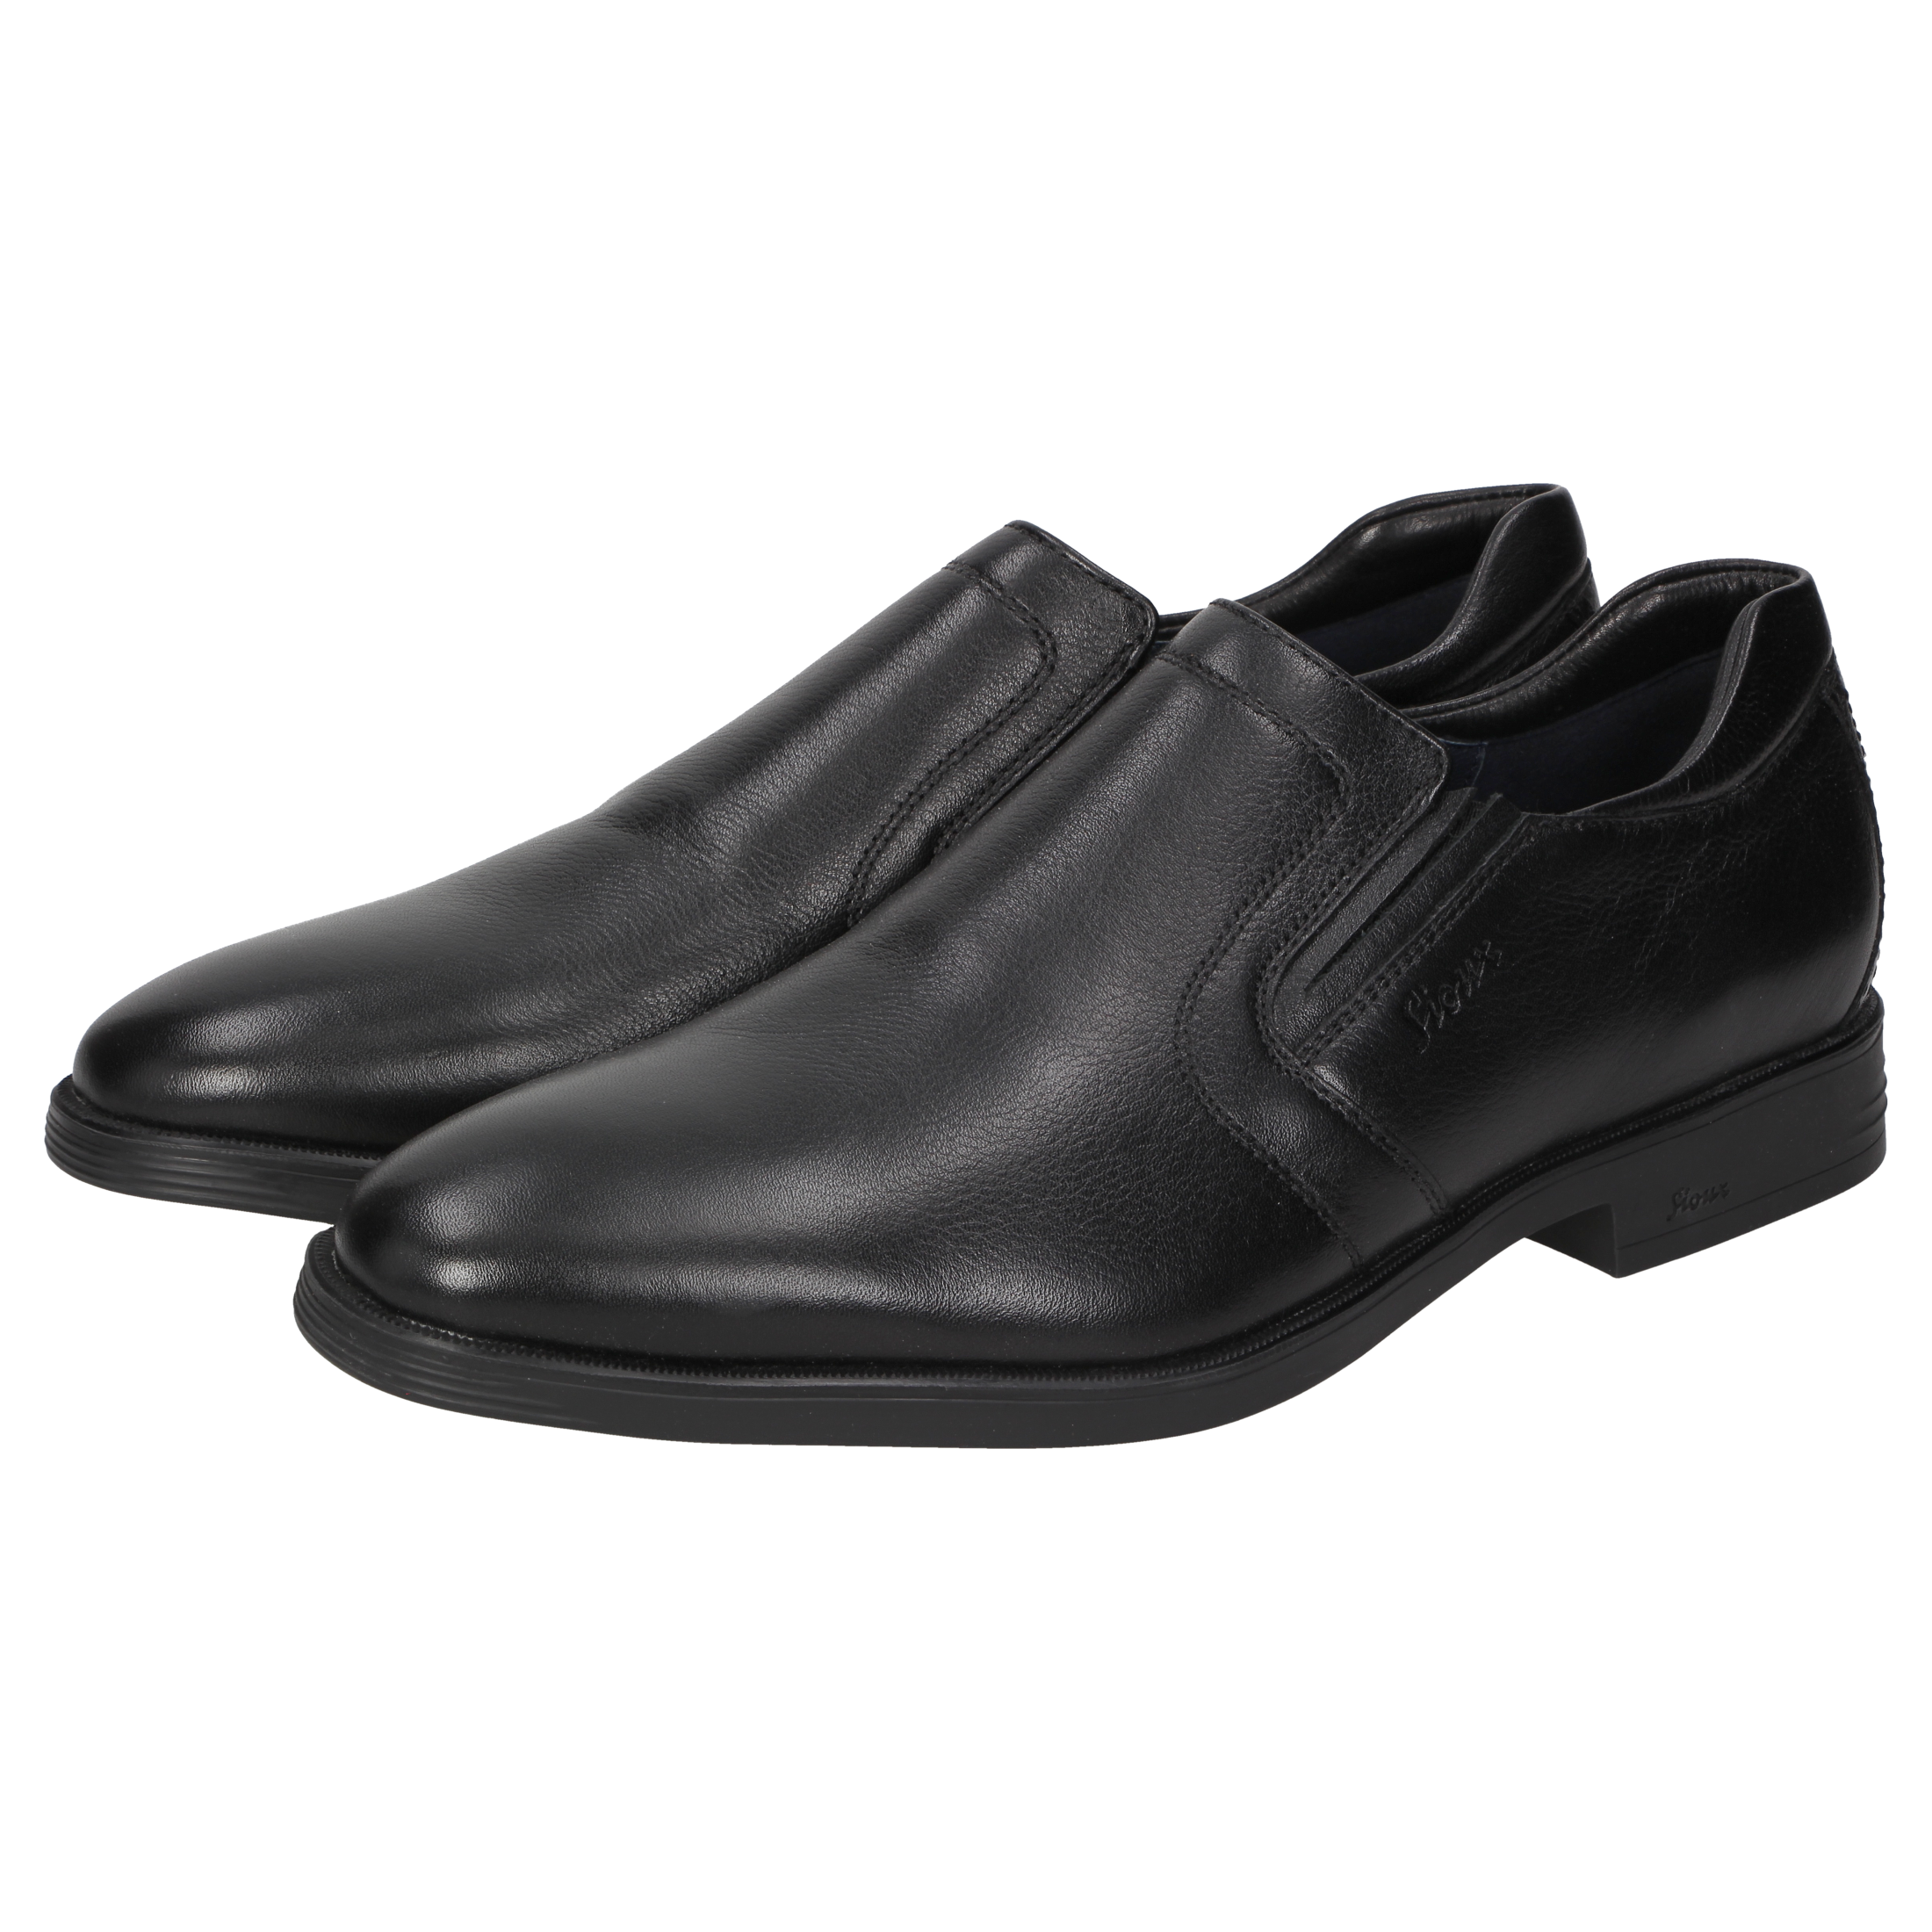 Mens PSL Black Leather Lace Up Formal Shoes UK Sizes 7-12 PSL146B 